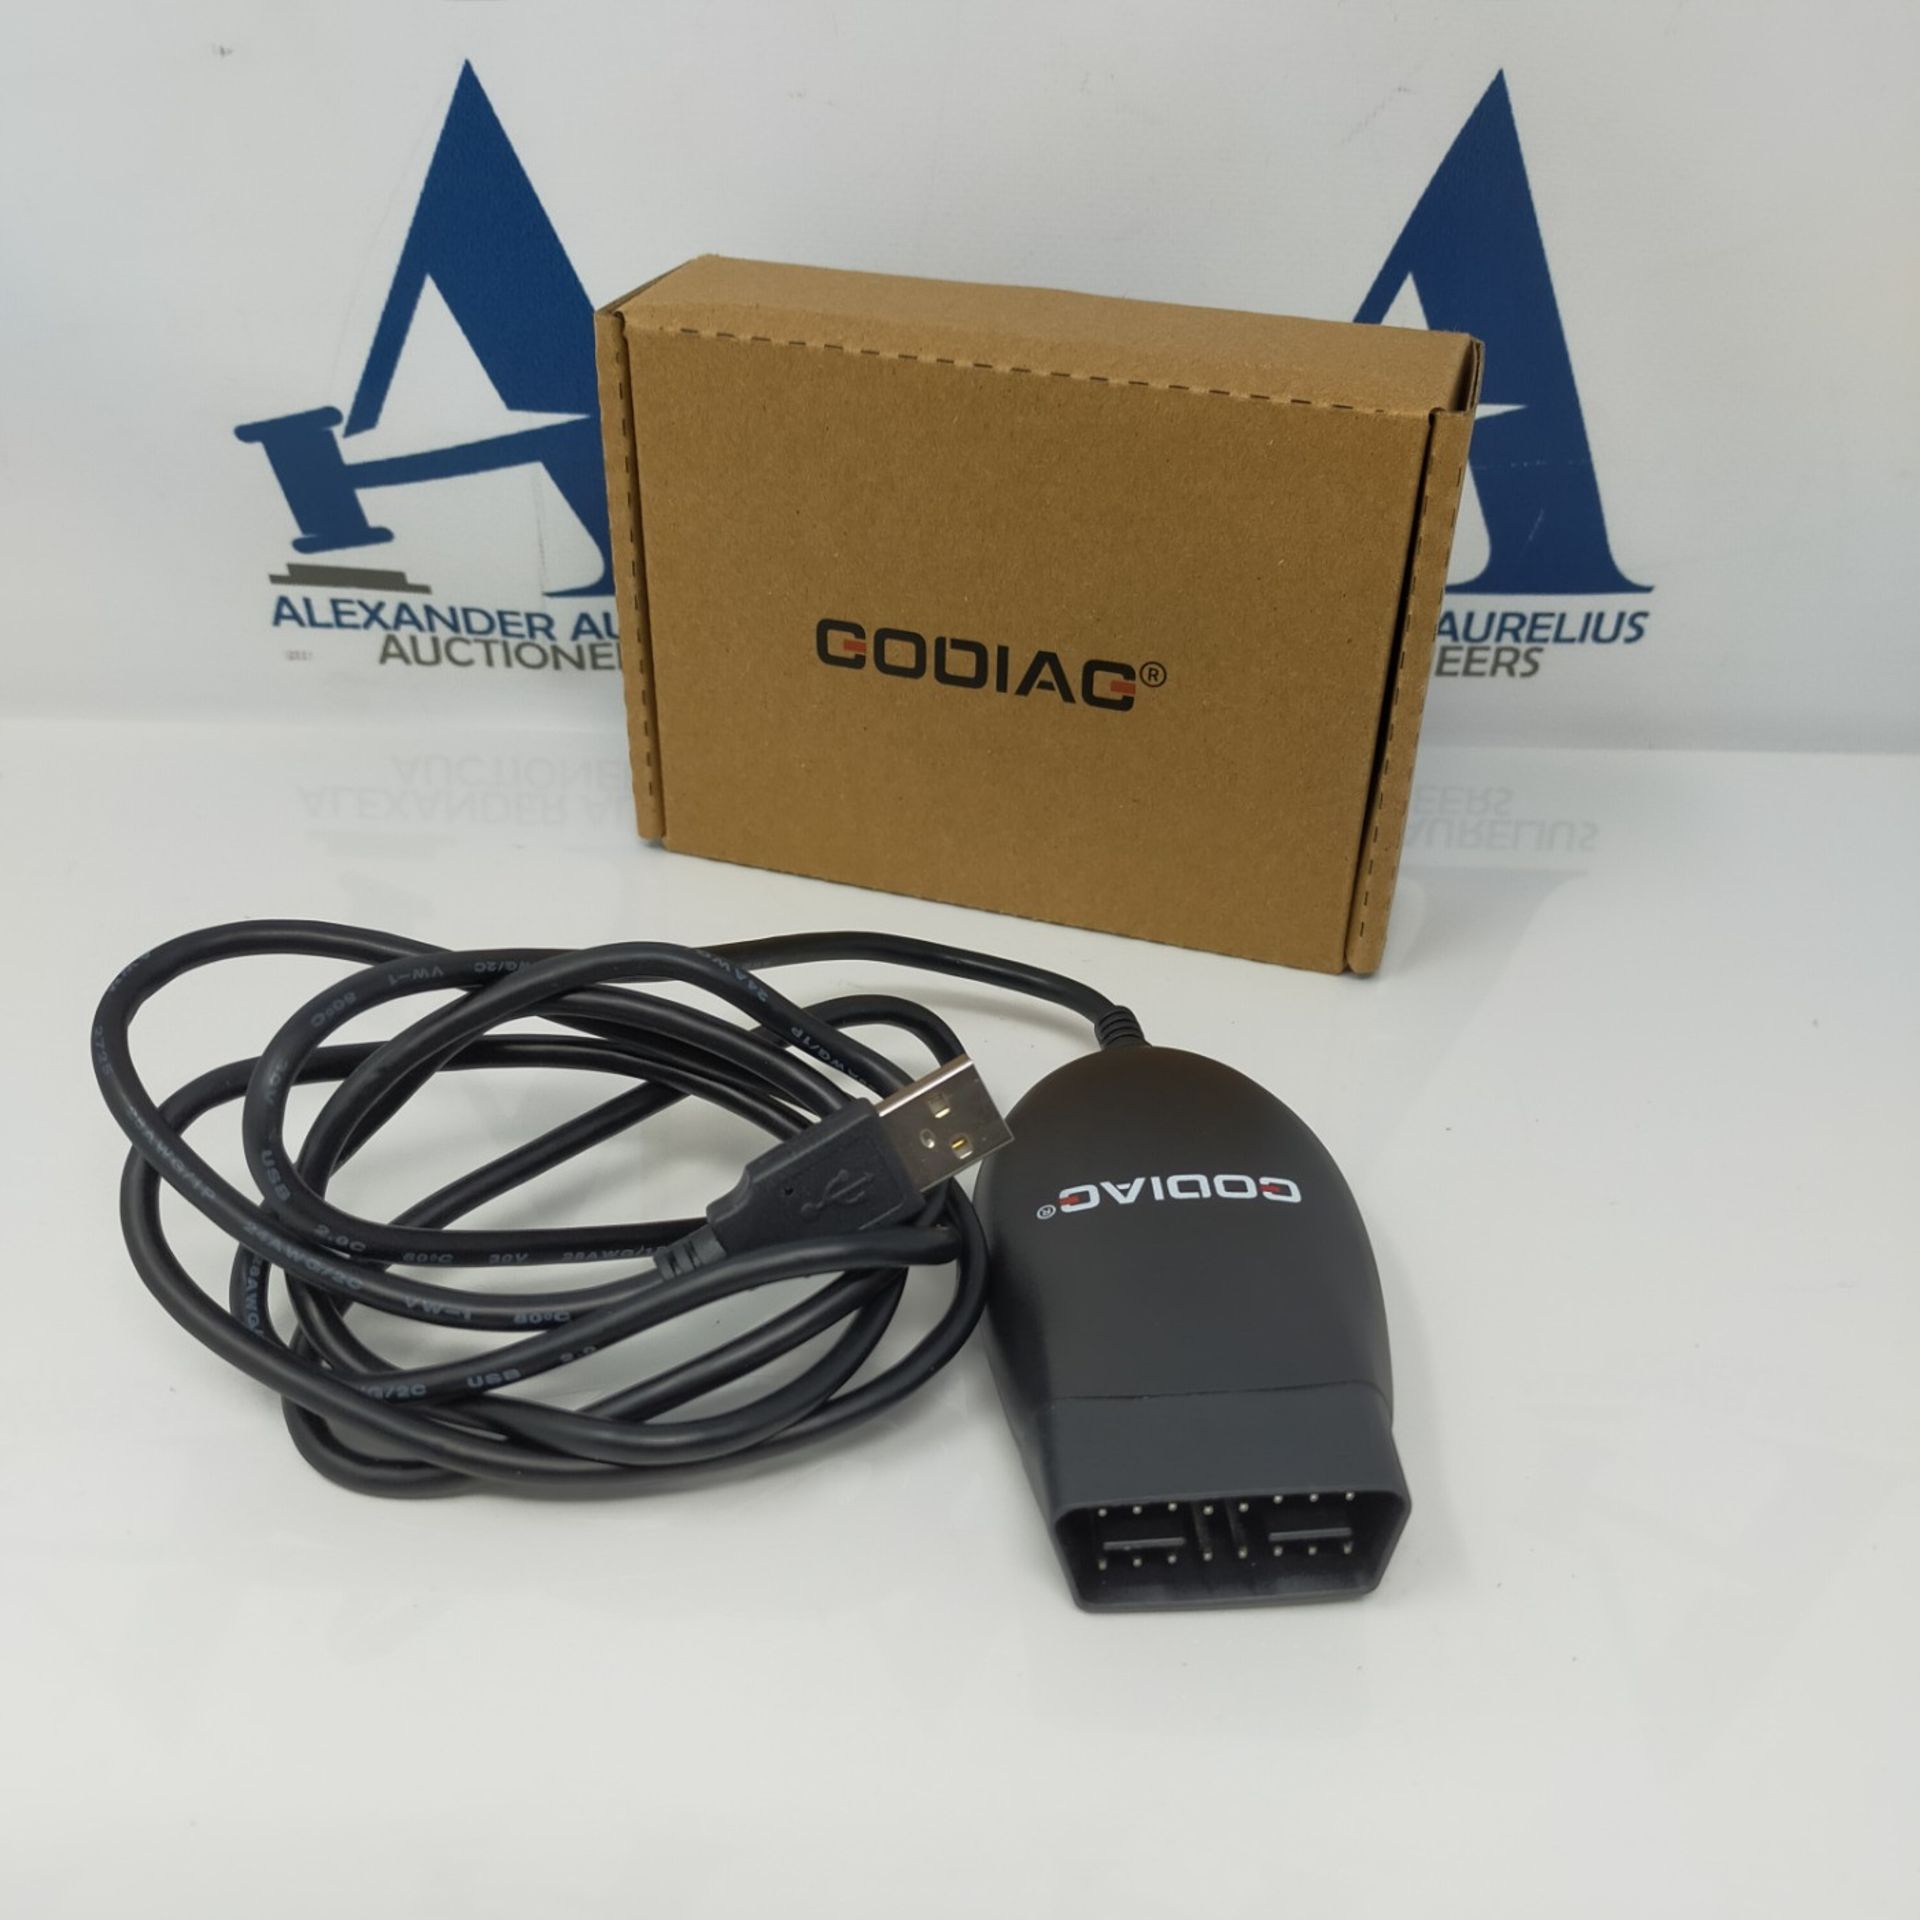 J2534 Openport 2.0 Cable, GODIAG OBD2 USB Adapter ECU Diagnostic Tool, Flash Chip Tunn - Image 6 of 8